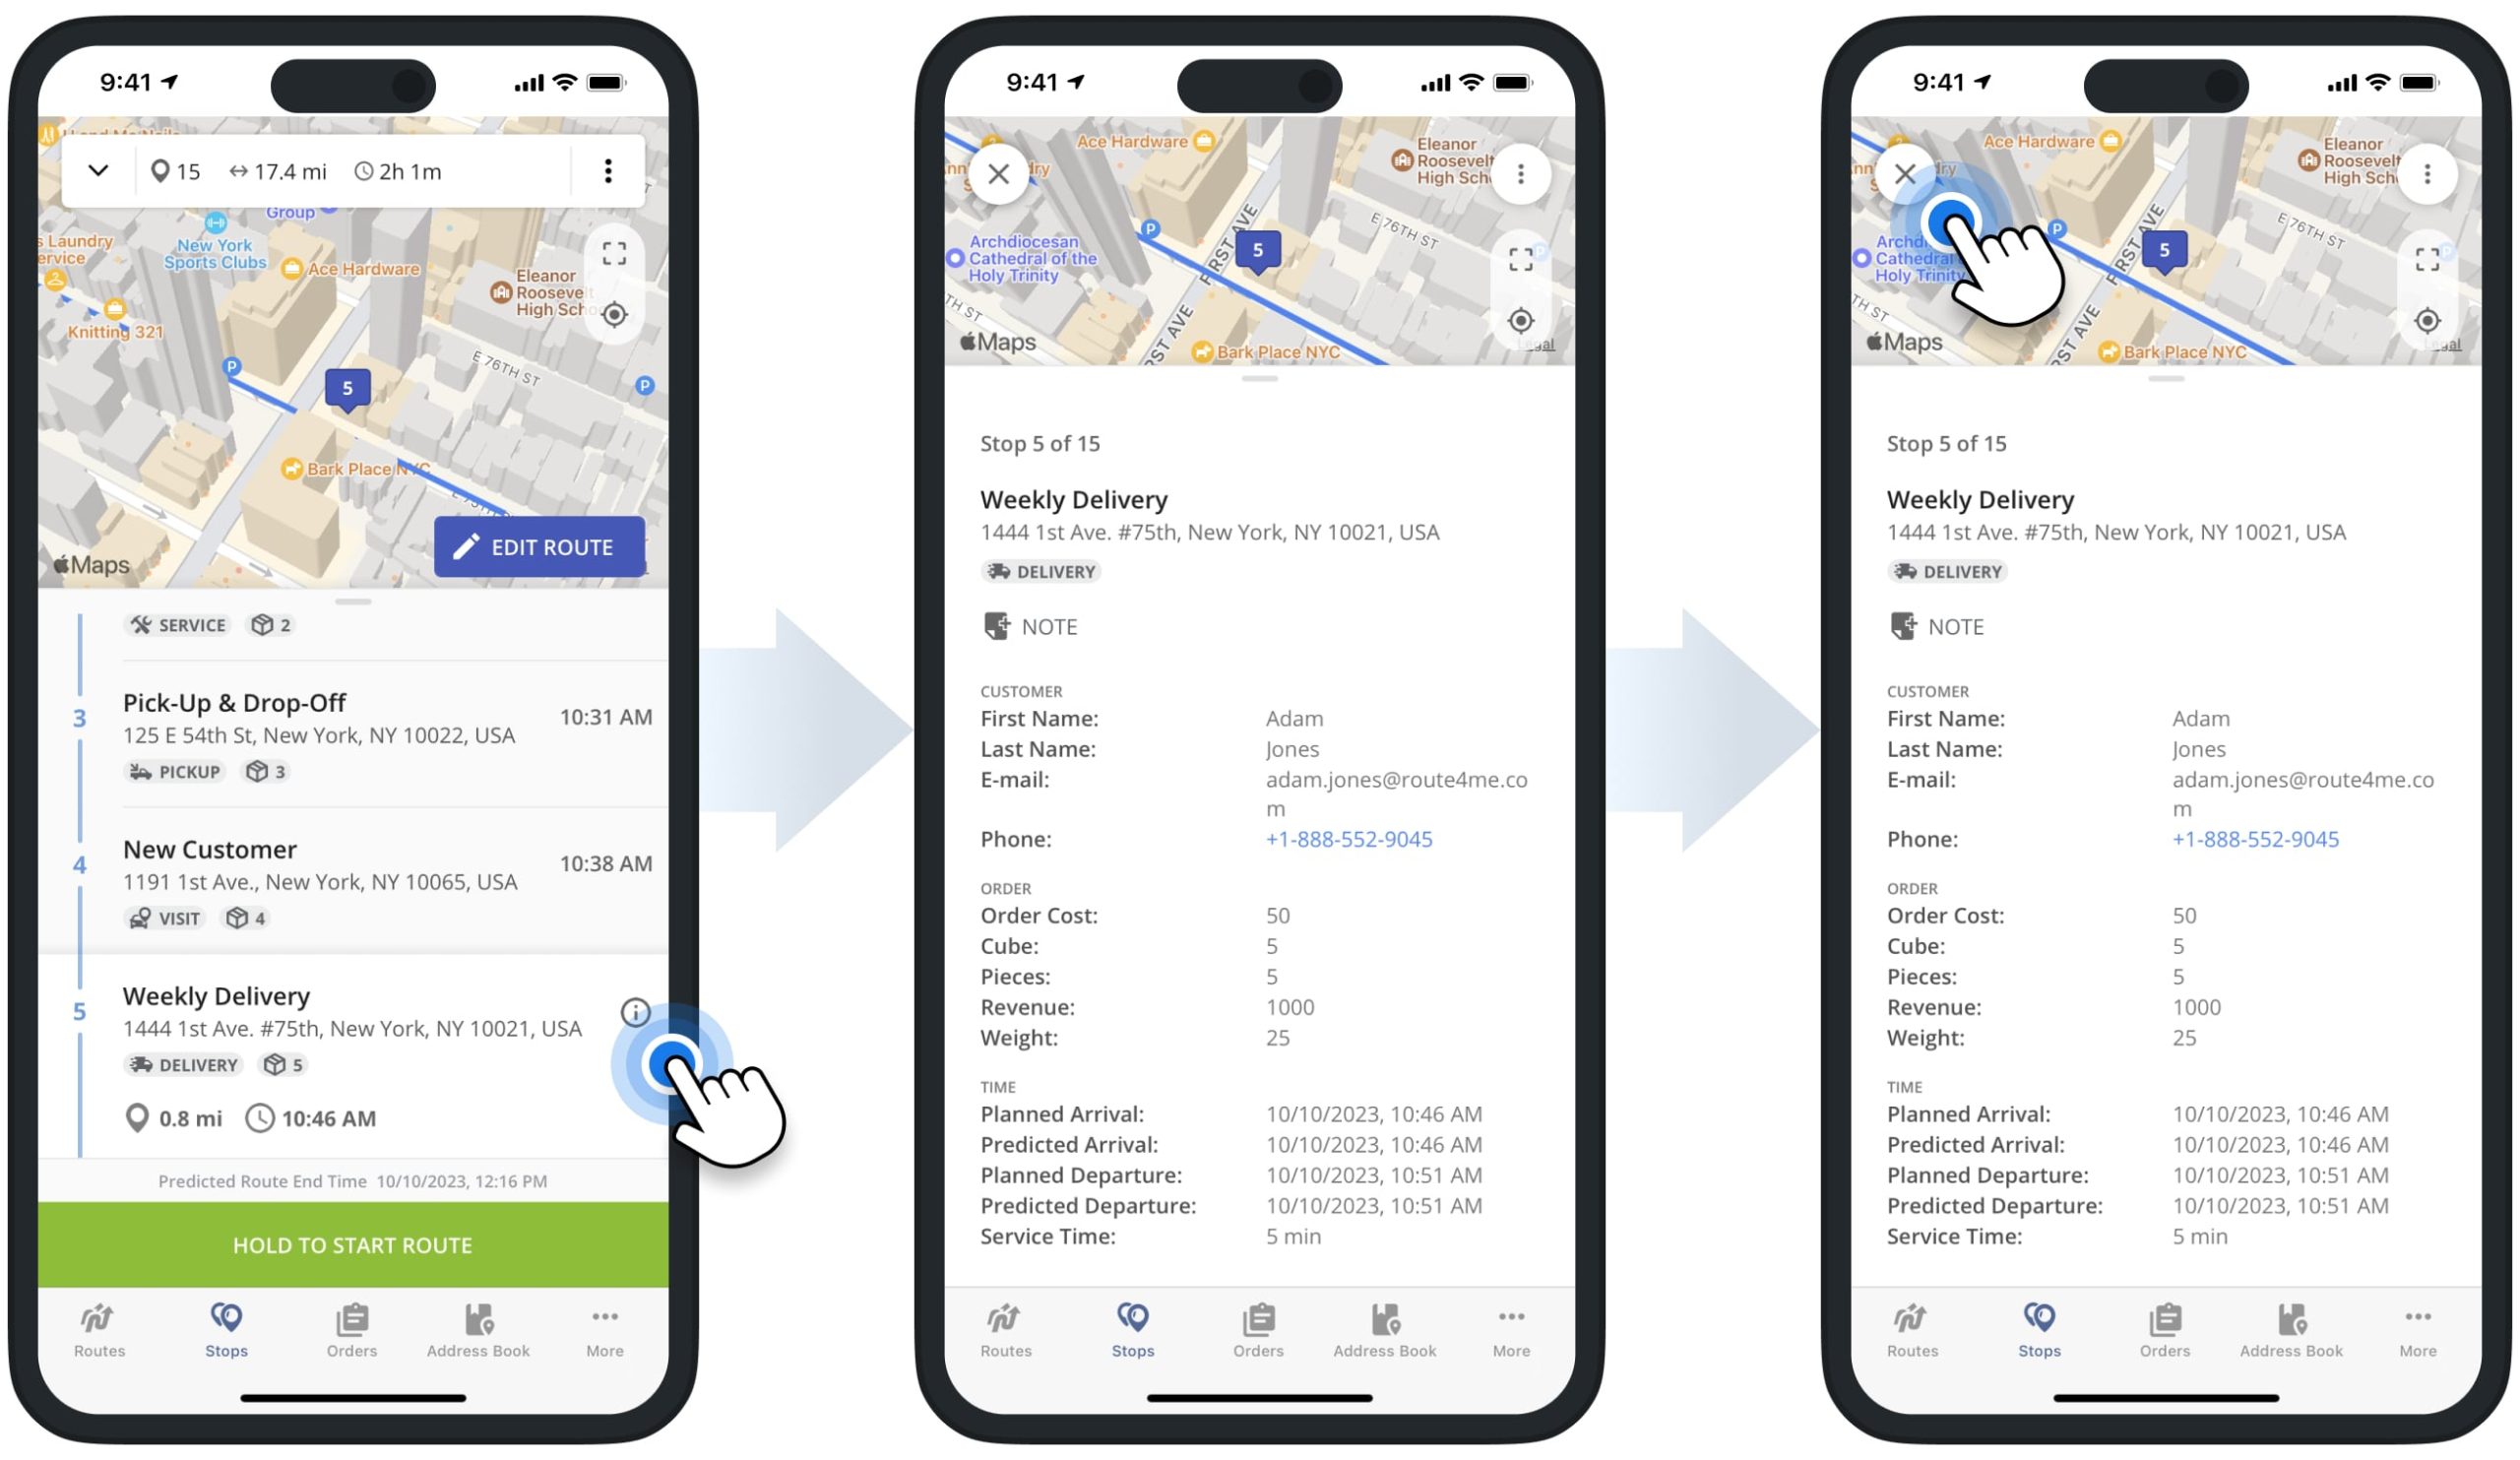 Stop info contains ETAs, order details, customer details, etc., on Route4Me's iPhone Route Planner app.